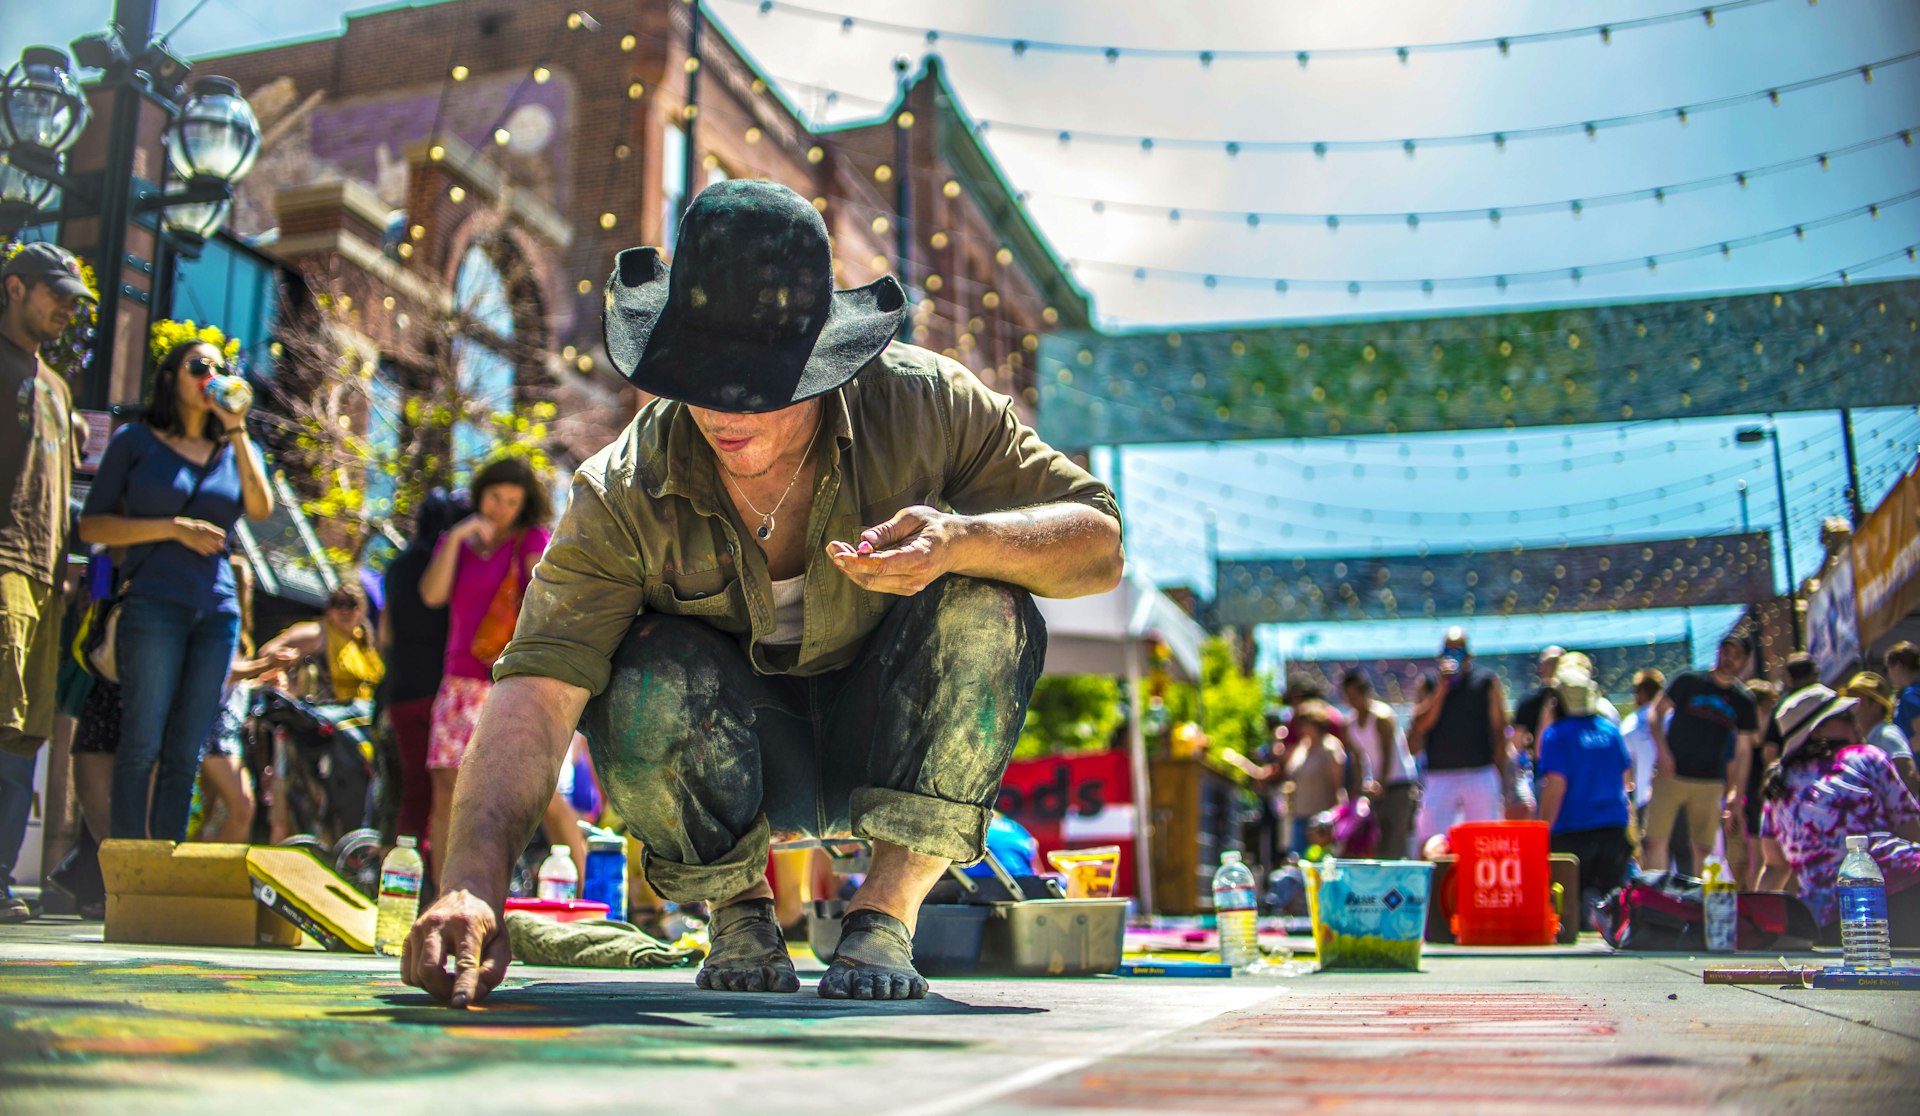 An artist creating sidewalk art at the Chalk Art Festival in Denver, Colorado